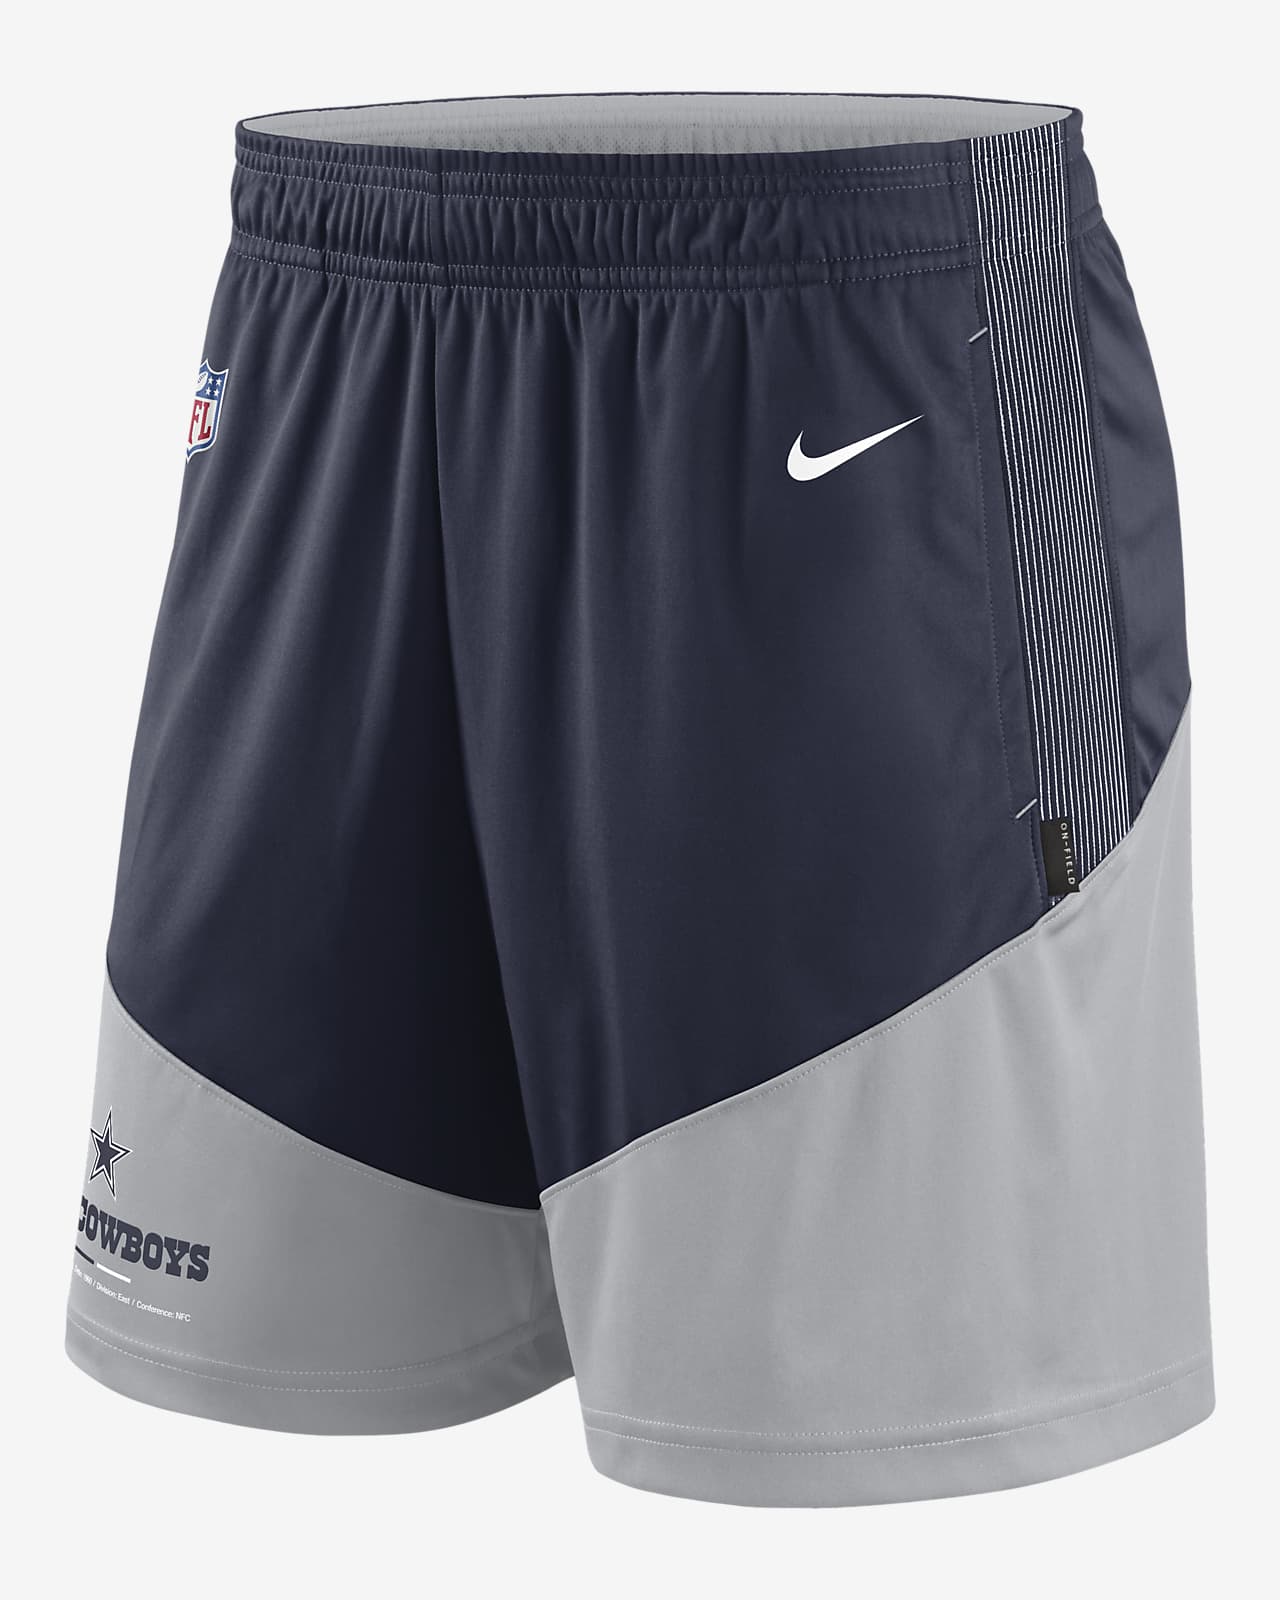 Nike Dri-FIT Primary Lockup (NFL Dallas Cowboys) Men's Shorts